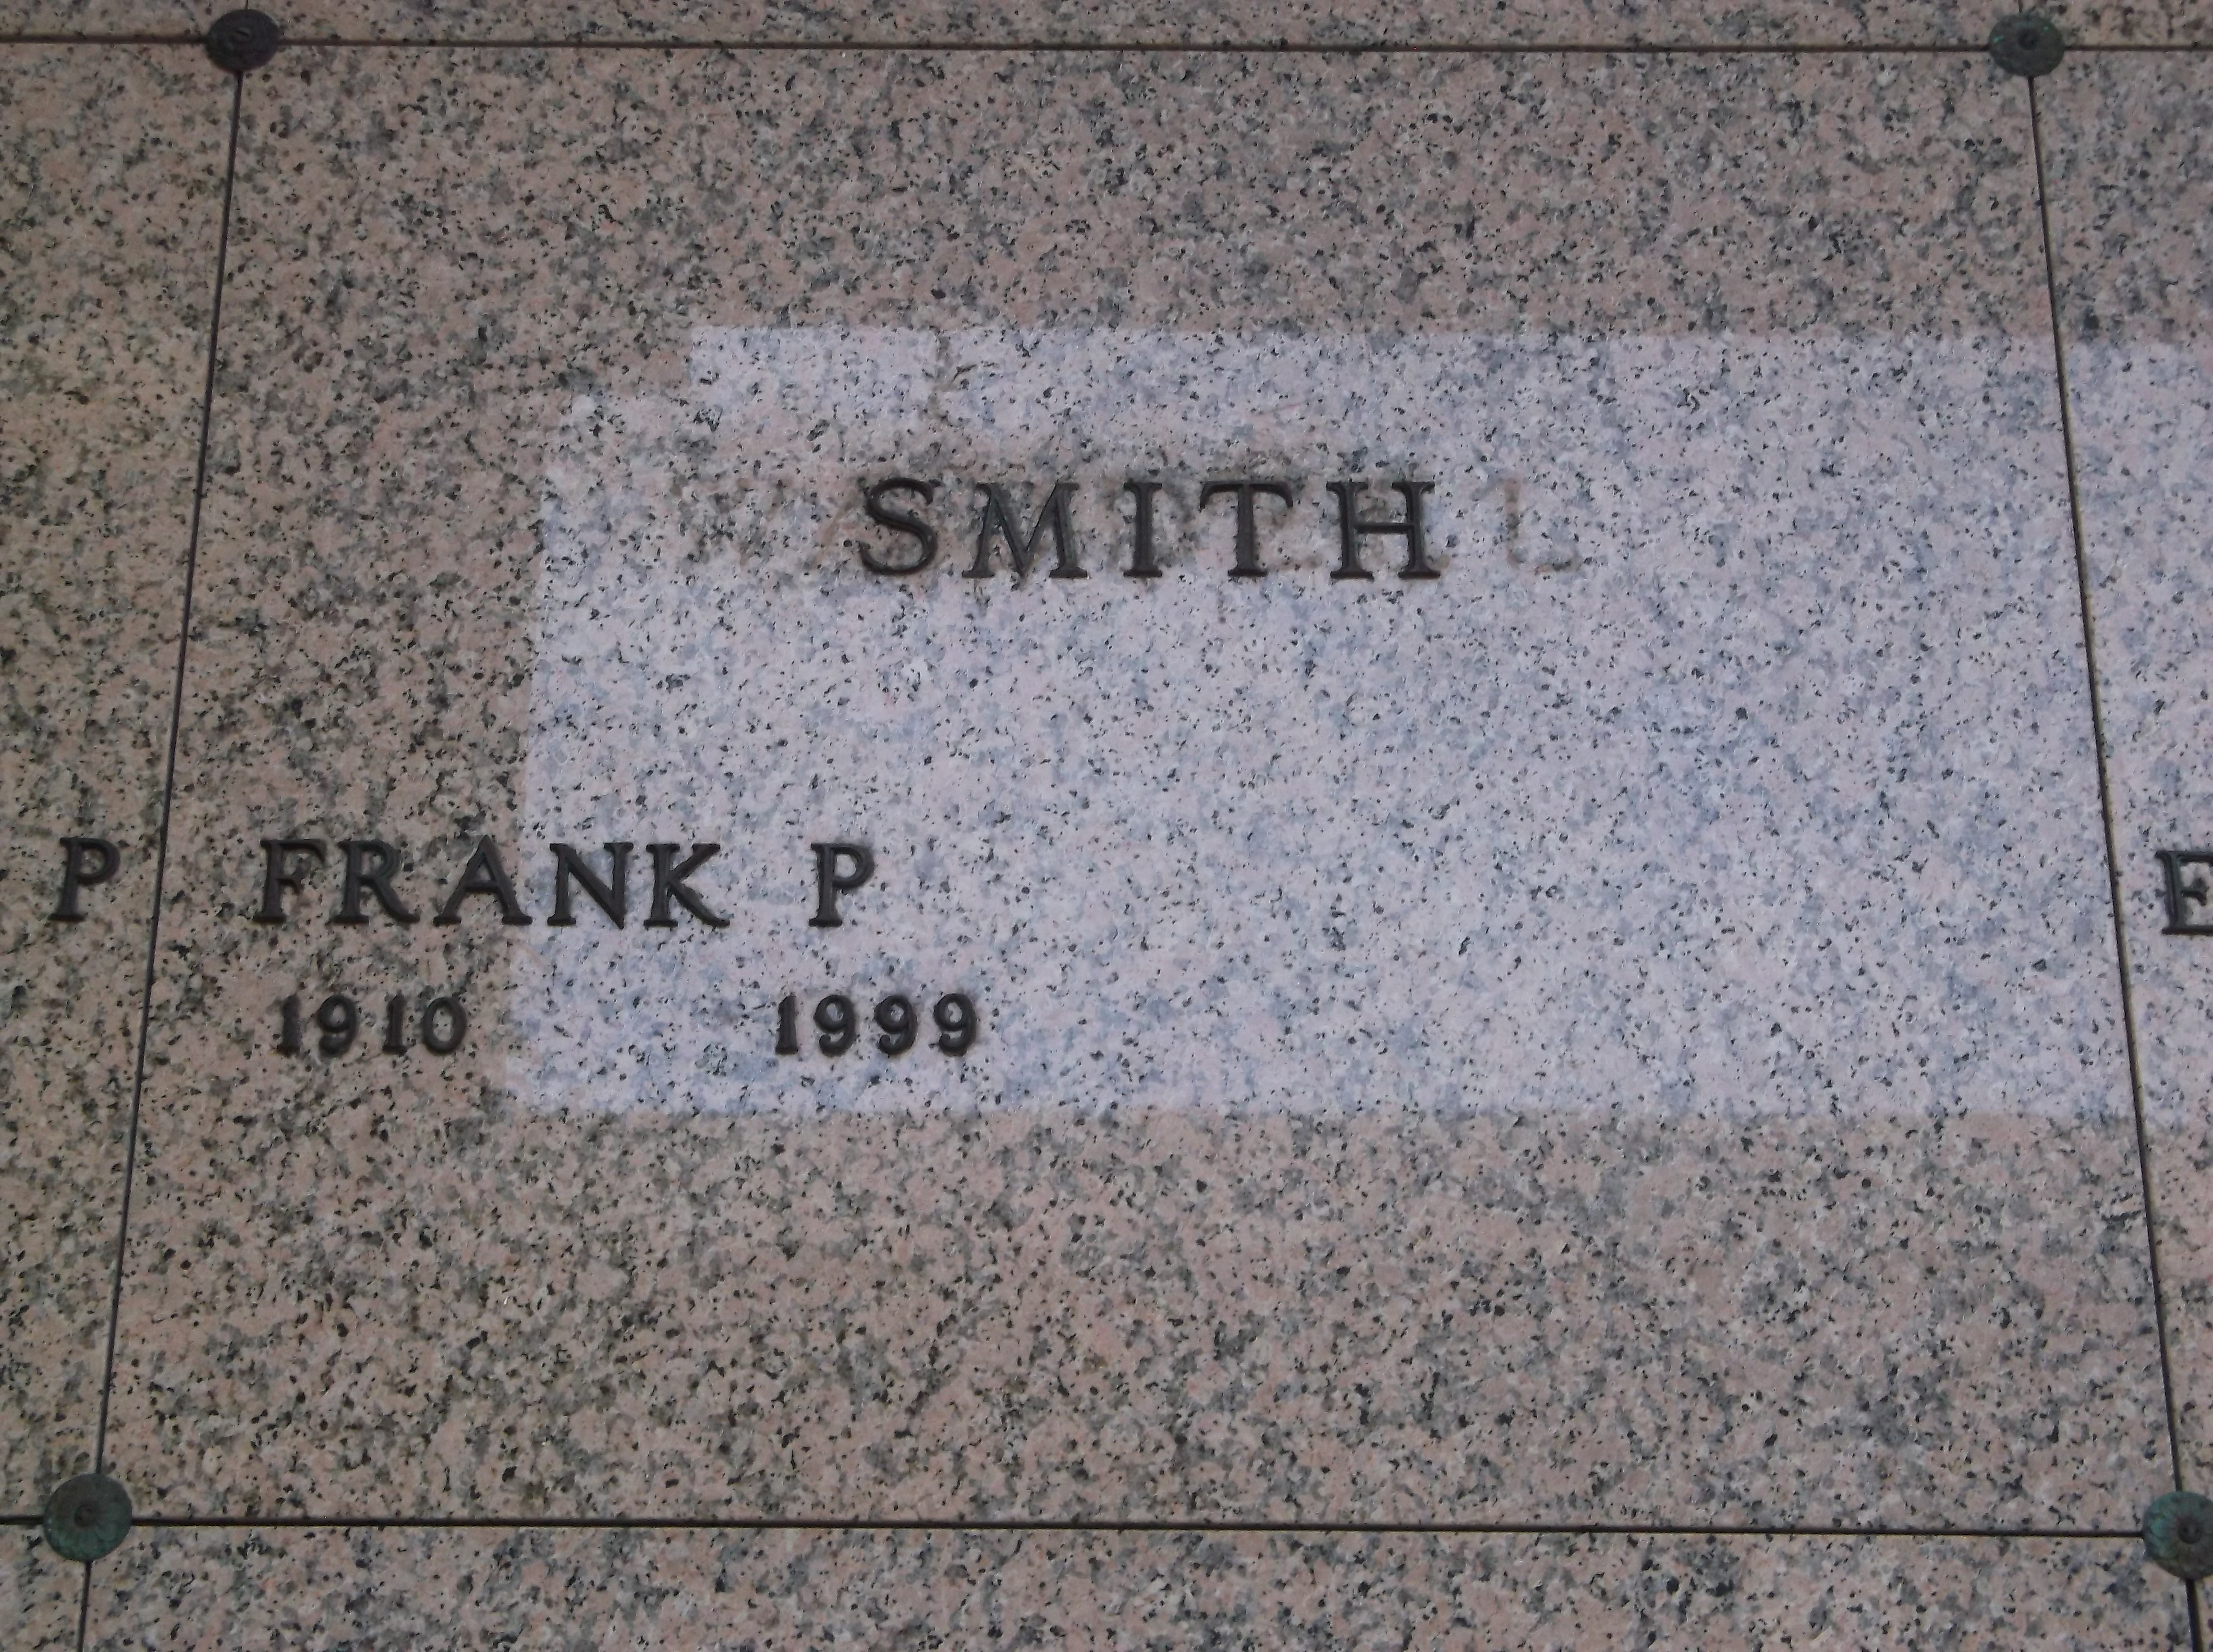 Frank P Smith